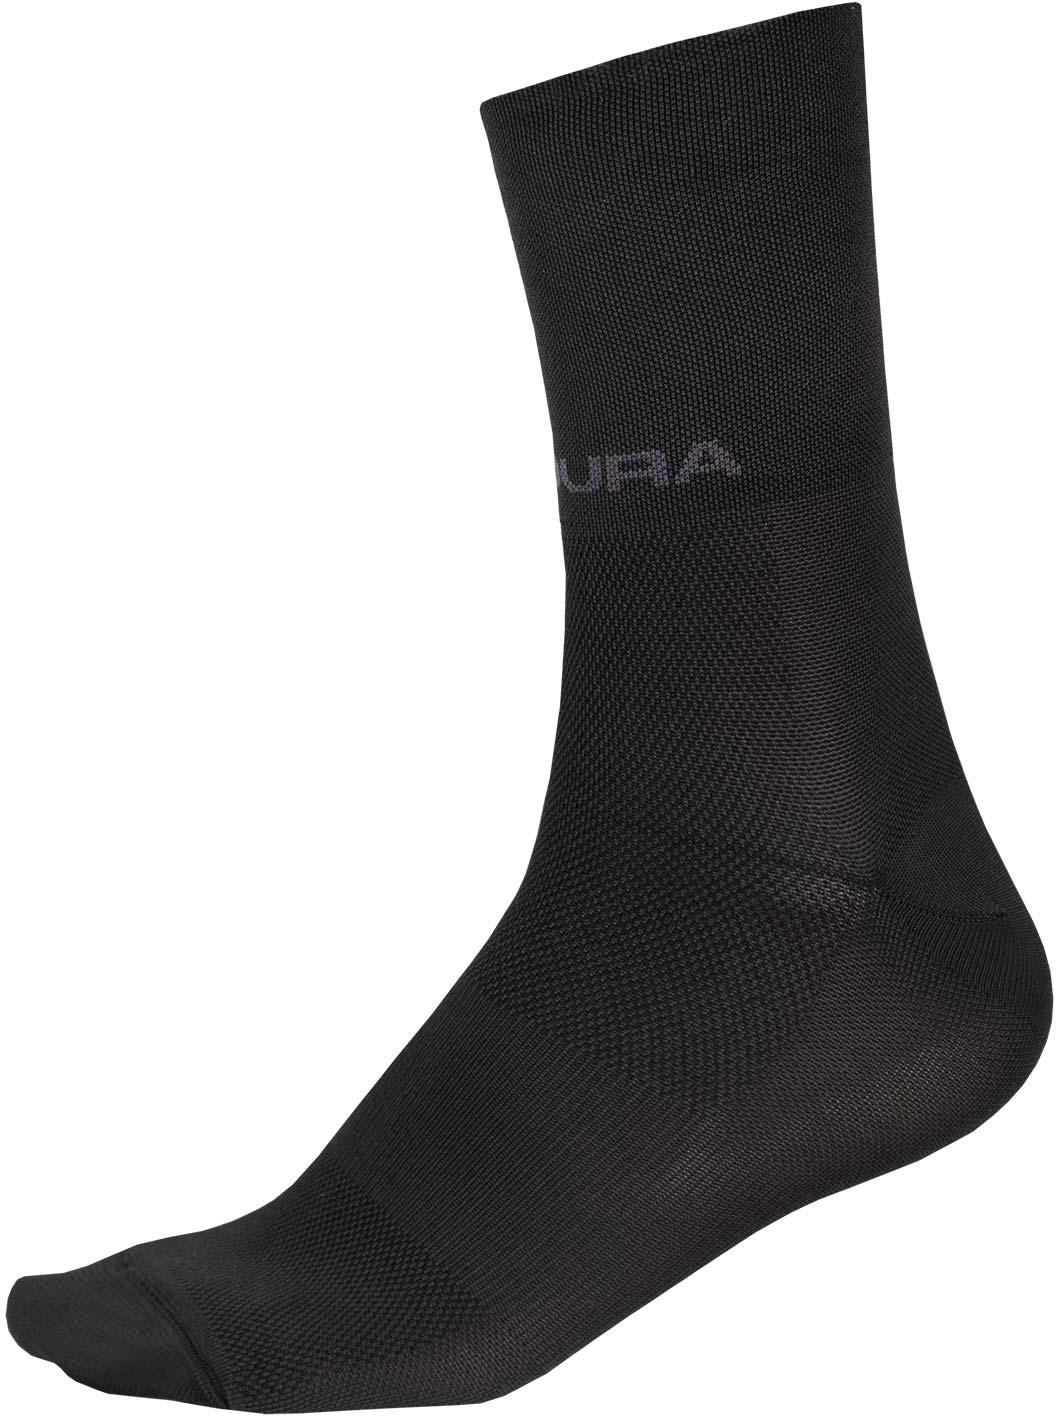 Endura Pro Sl Cycling Sock Ii - Black